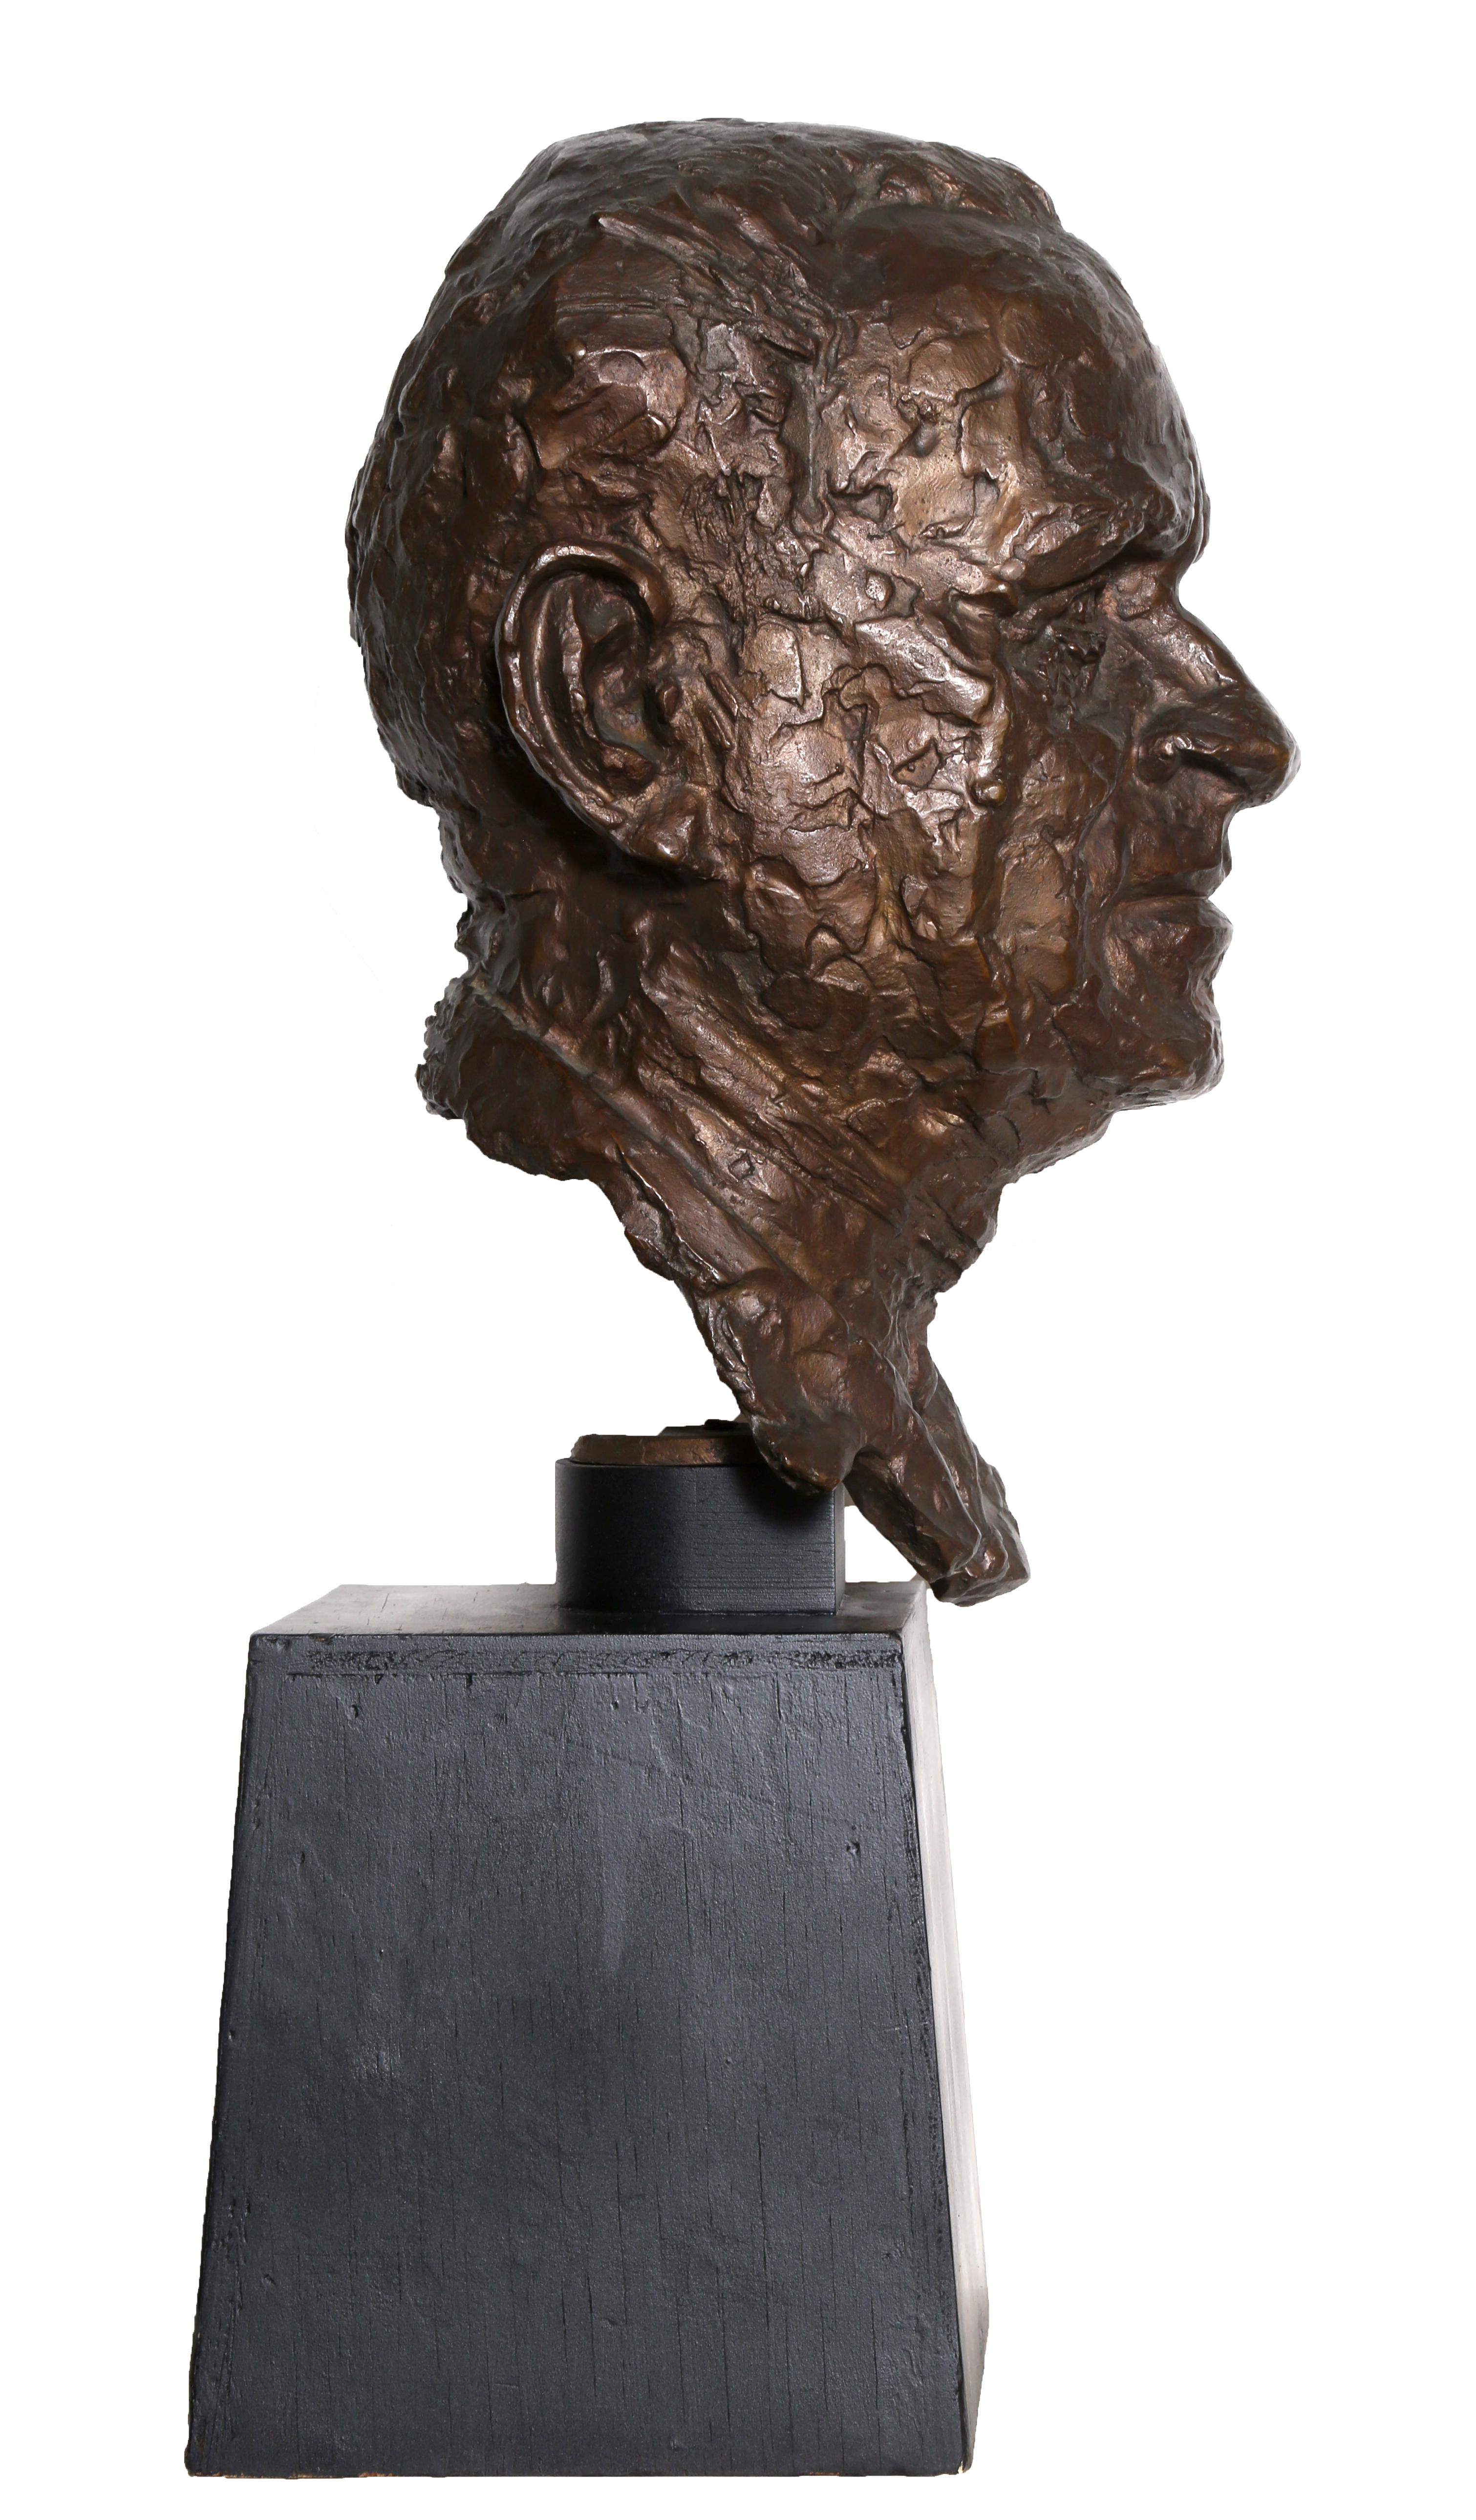 Artist: Chaim Gross, Austrian/American (1904 - 1991)
Title: Bust of a Man
Year: 1967
Medium: Bronze Sculpture, signature inscribed
Size: 12.5 x 6.5 x 8.5 in. (31.75 x 16.51 x 21.59 cm)
Base: 7 x 8 x 7.5 inches